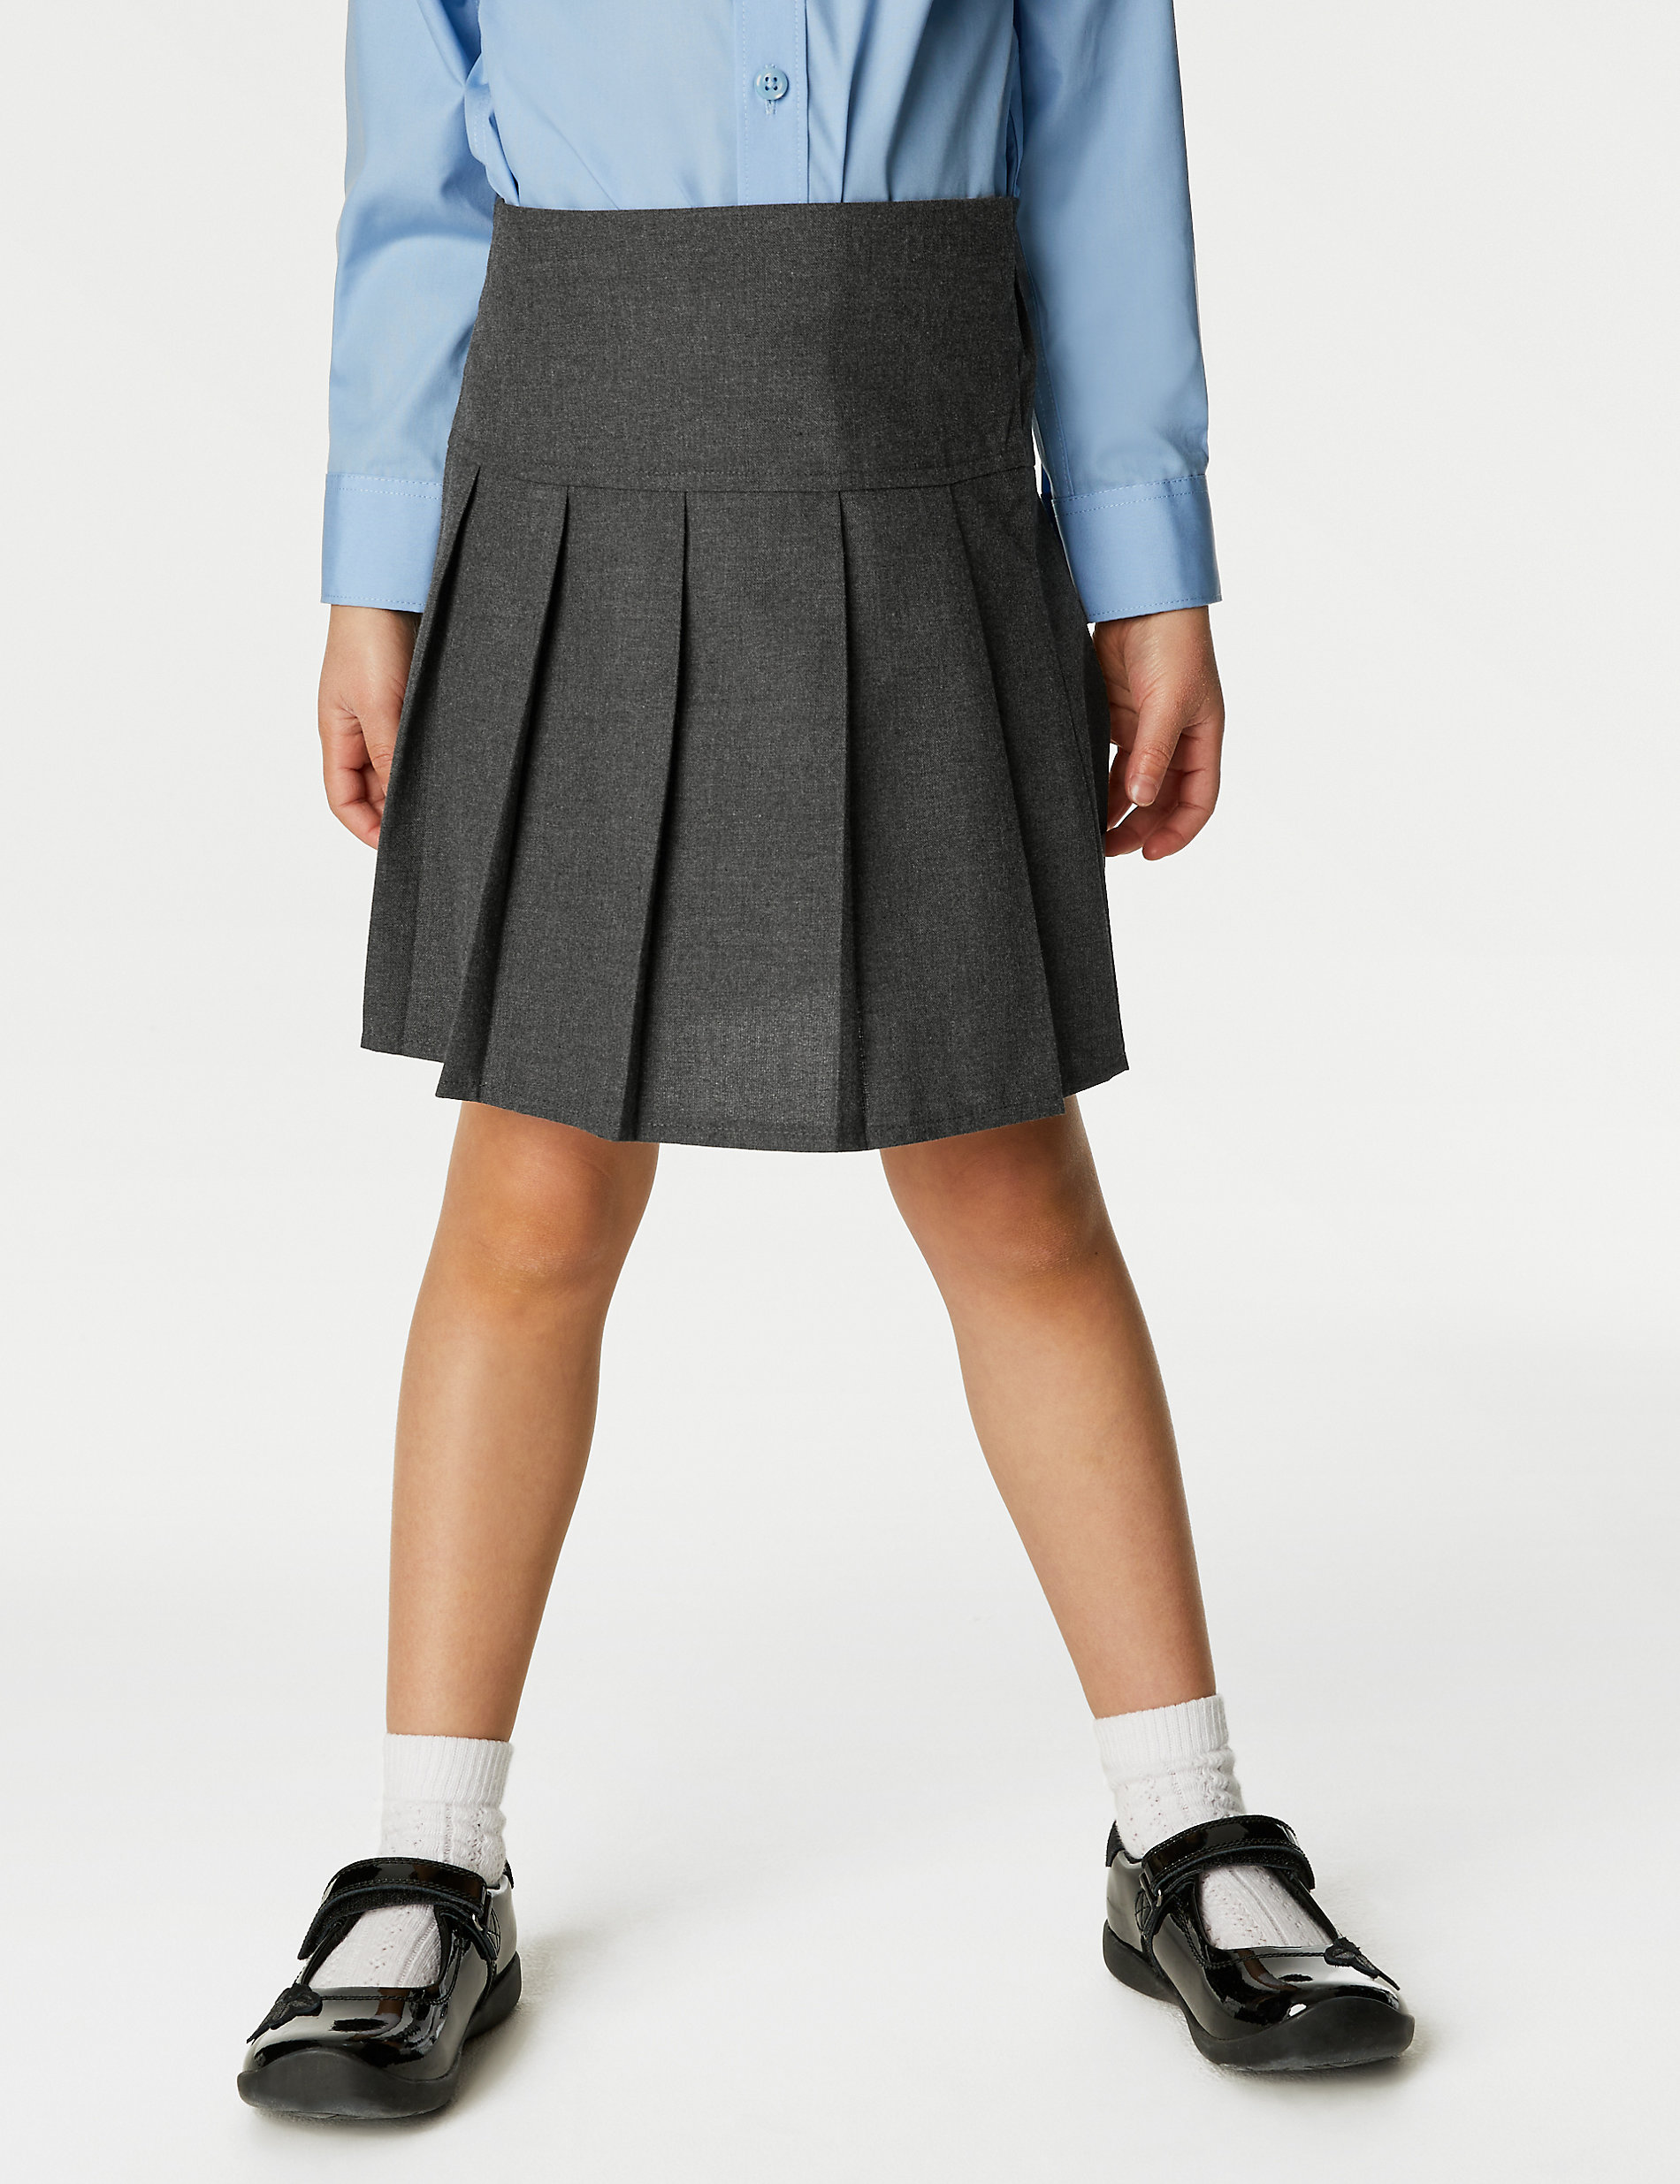 2pk Girls' Crease Resistant School Skirts (2-16 Yrs)